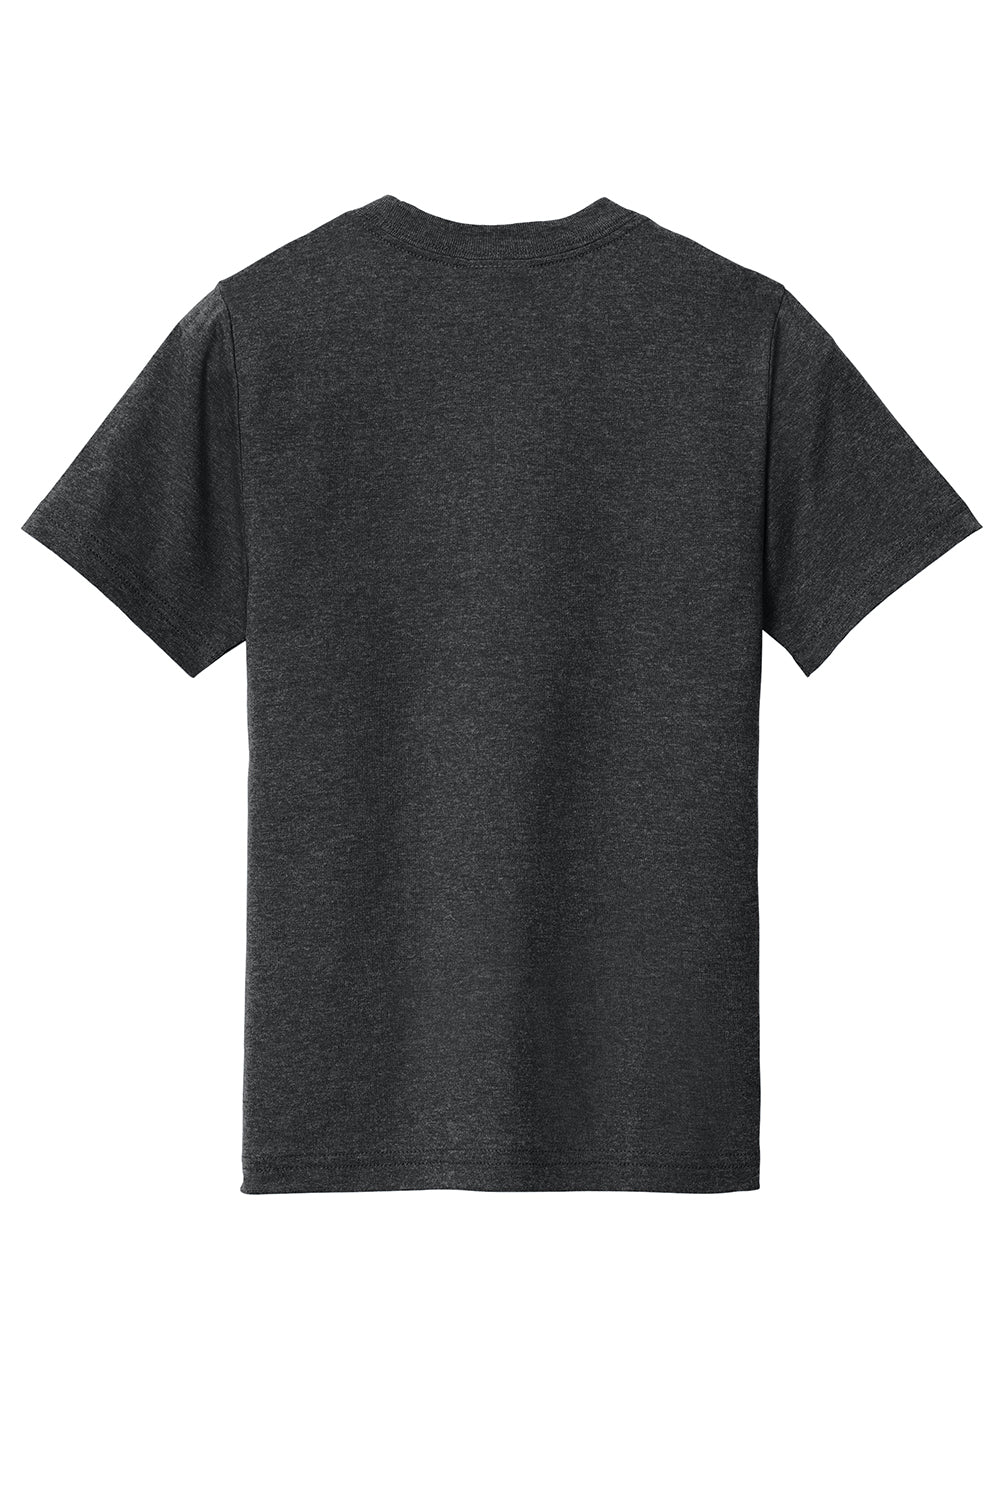 Port & Company PC330Y Youth Short Sleeve Crewneck T-Shirt Heather Black Flat Back